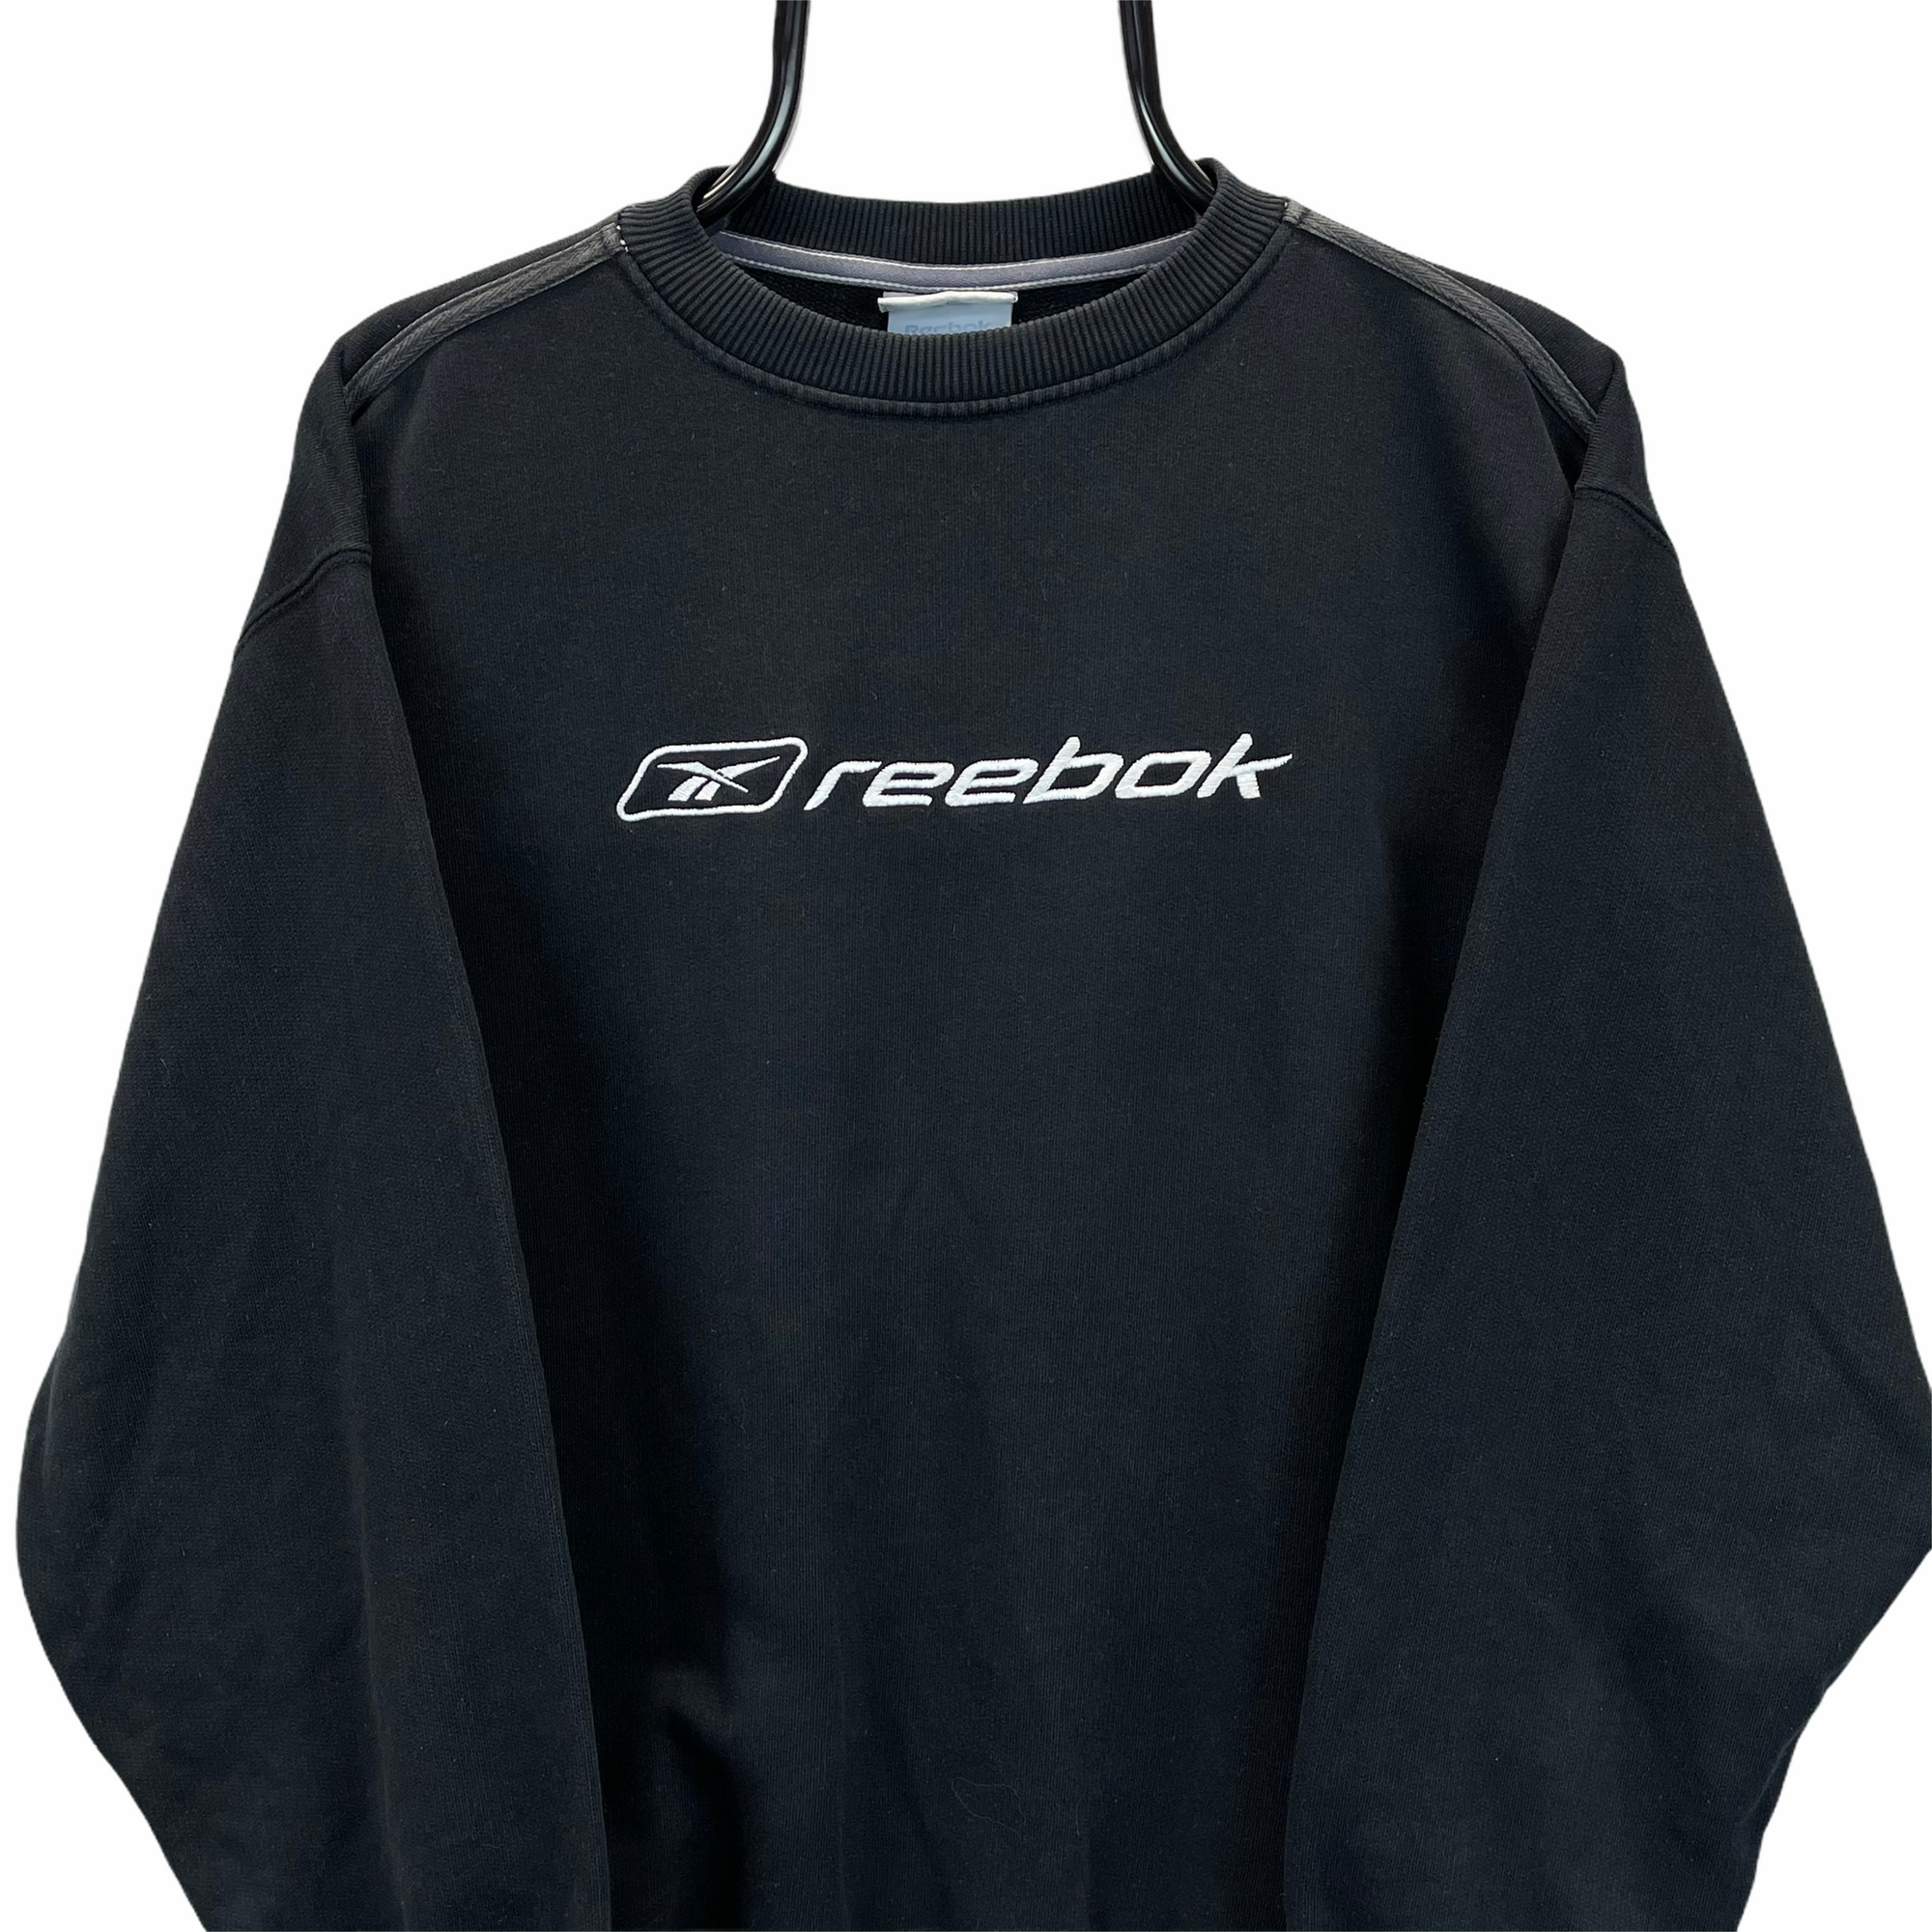 Vintage Reebok Spellout Sweatshirt in Black & White - Men's Medium/Women's Large